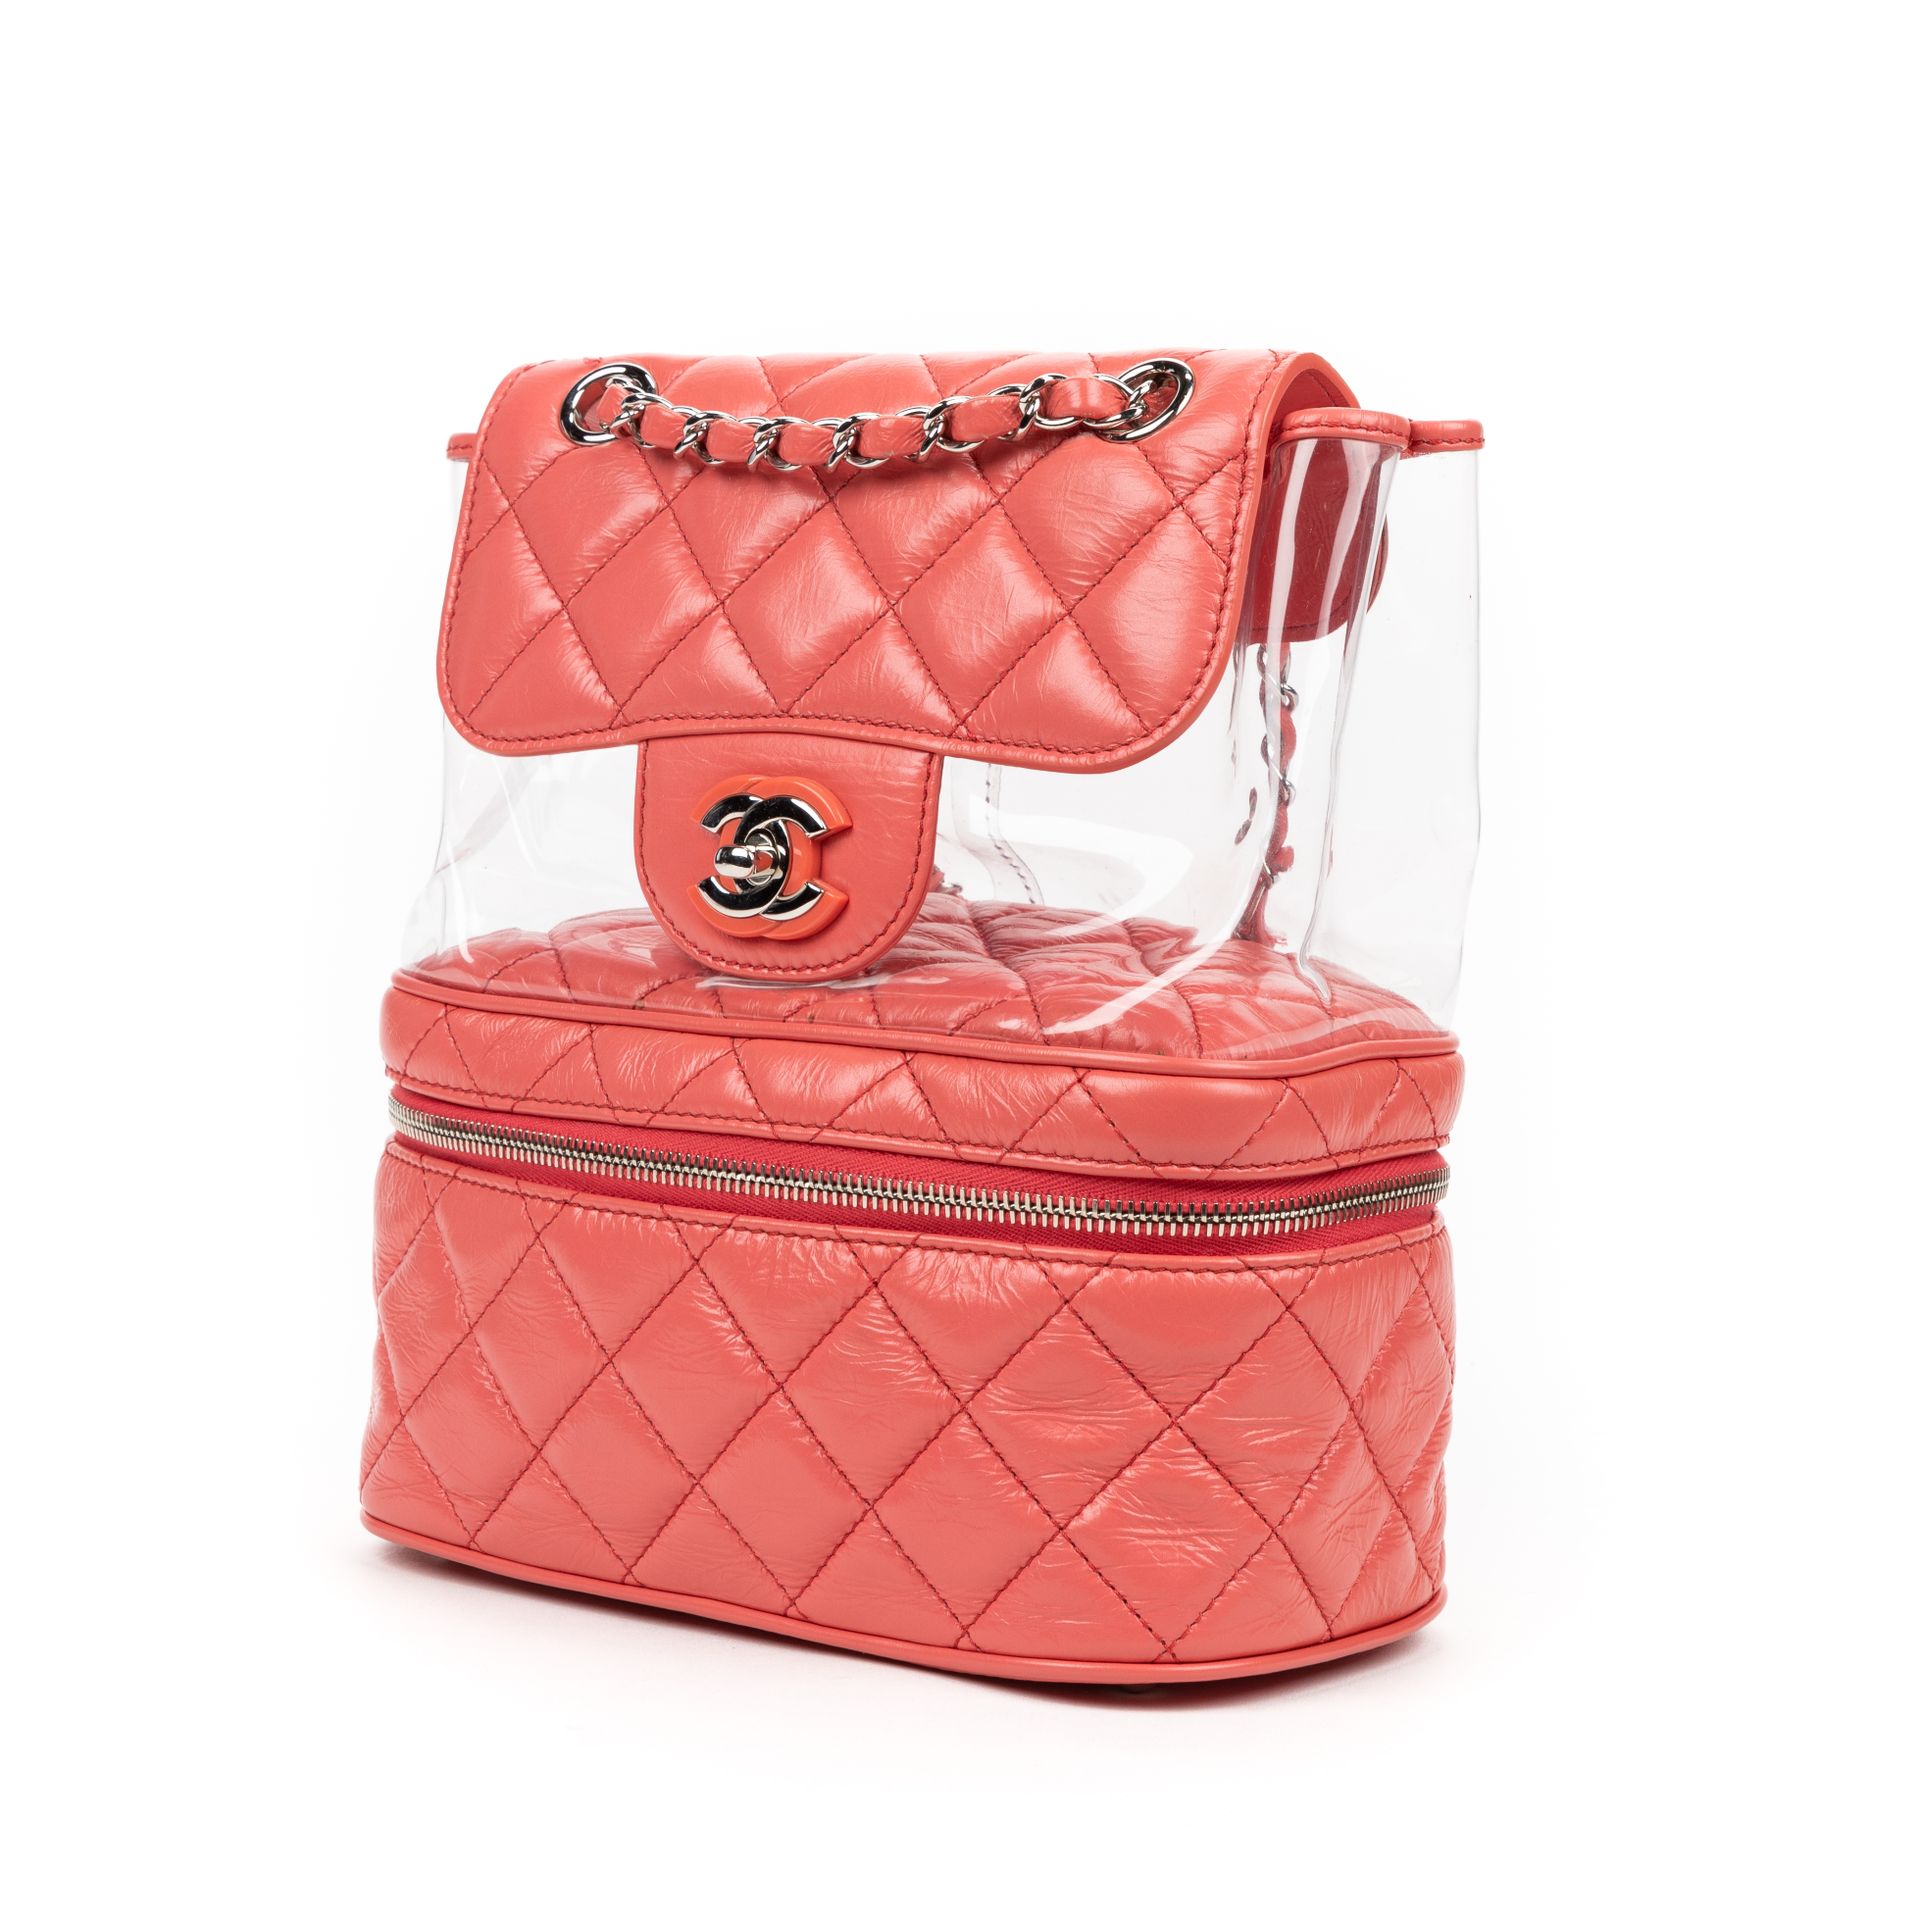 Chanel CHANEL巴黎 粉红色绗缝皮革和透明塑料的小背包 - 钯金金属首饰 - 包的底部有一个拉链隔层 - 真品标签 - 约在2018年 - 状况非常好&hellip;